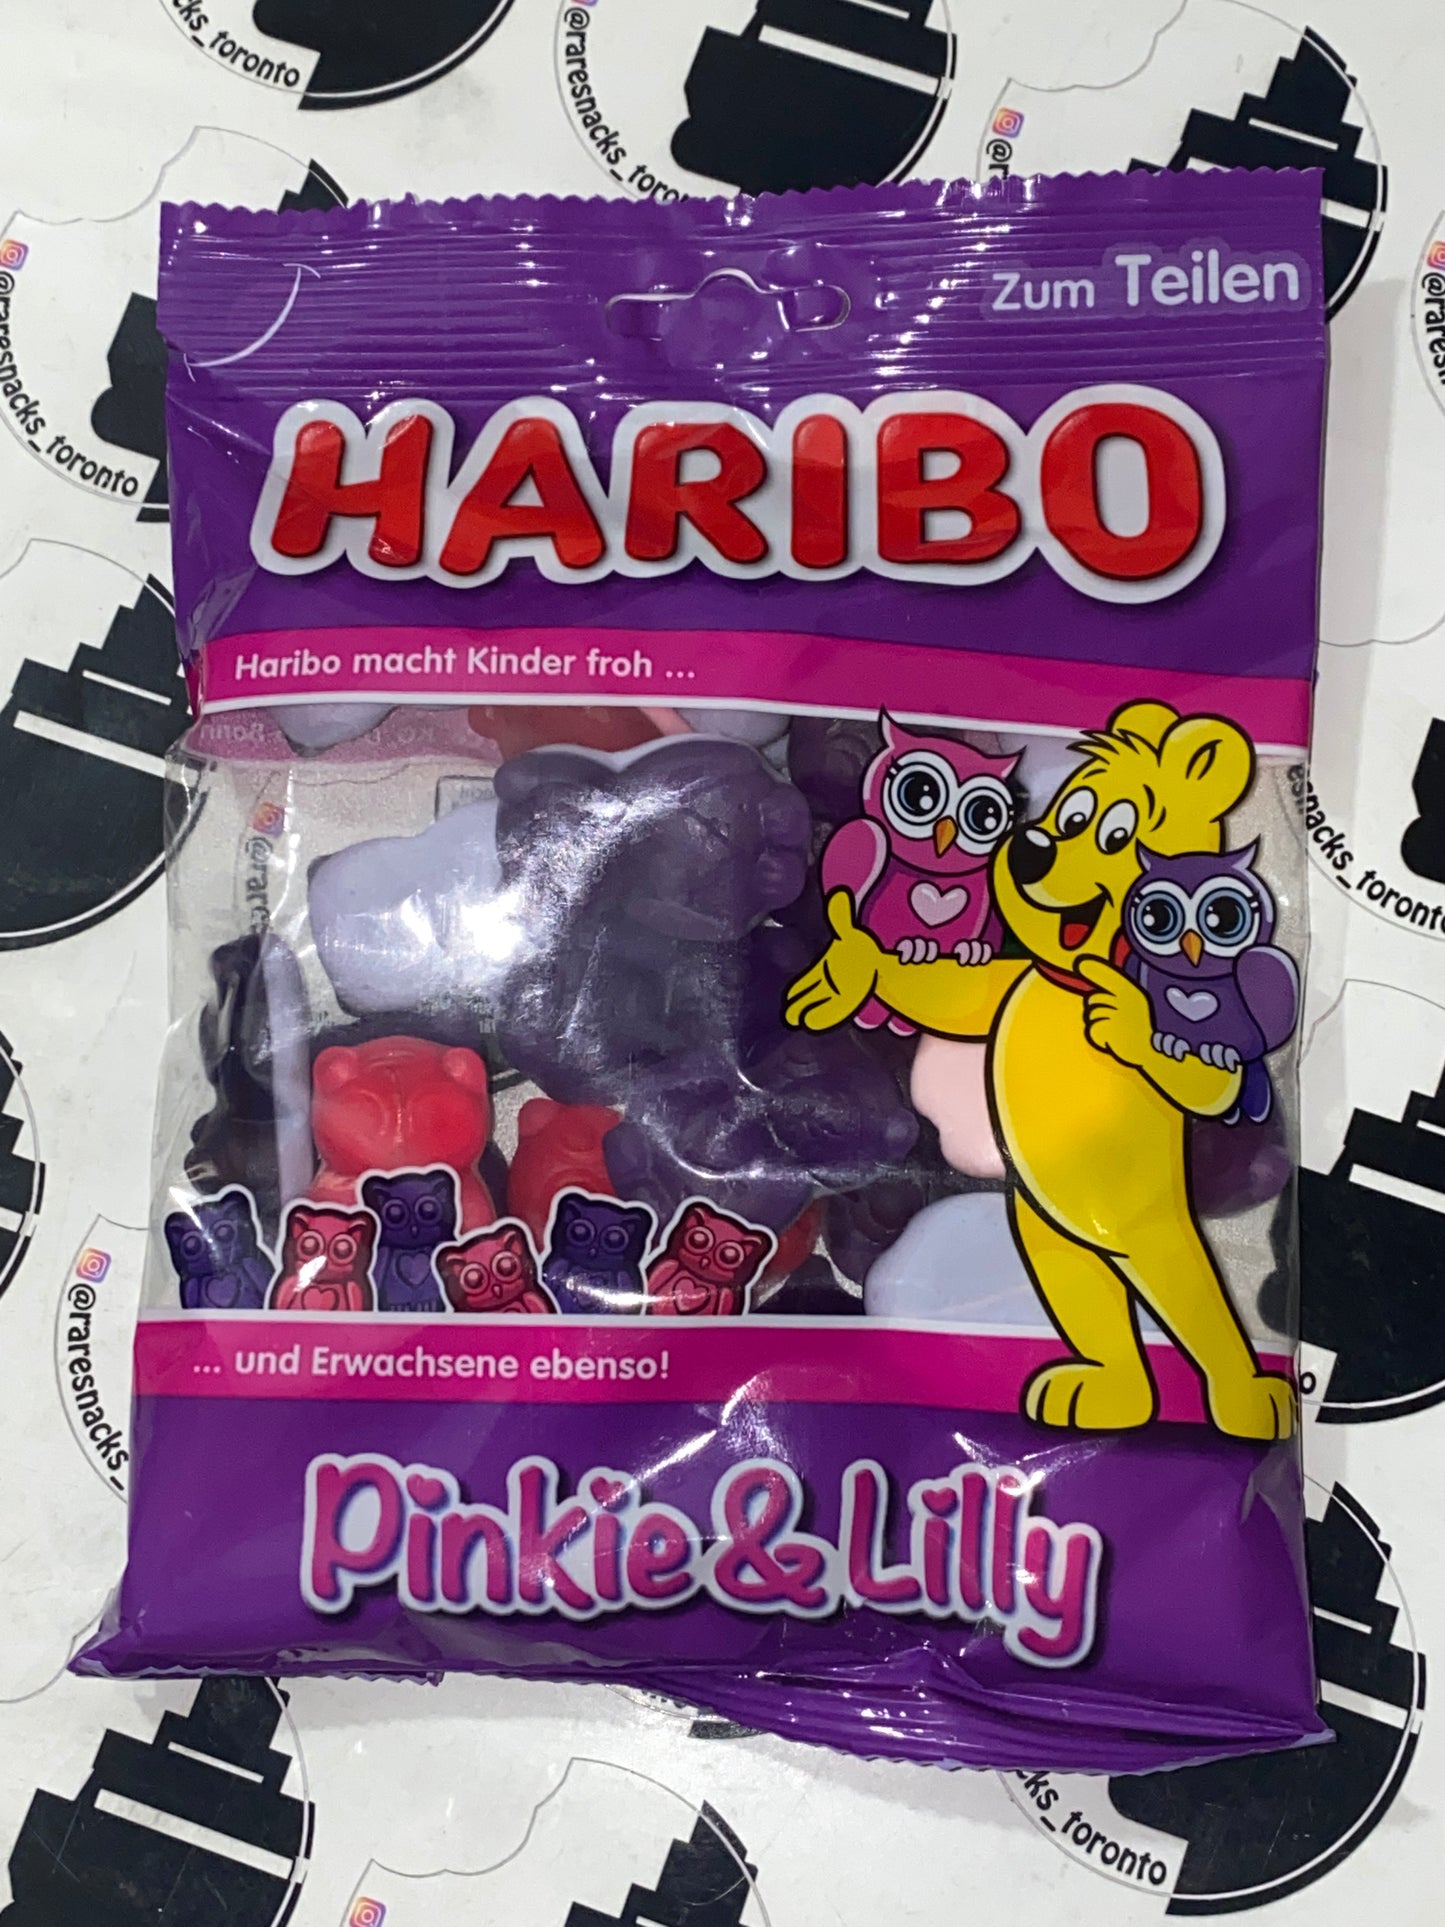 Haribo Pinkie & Lilly 200g